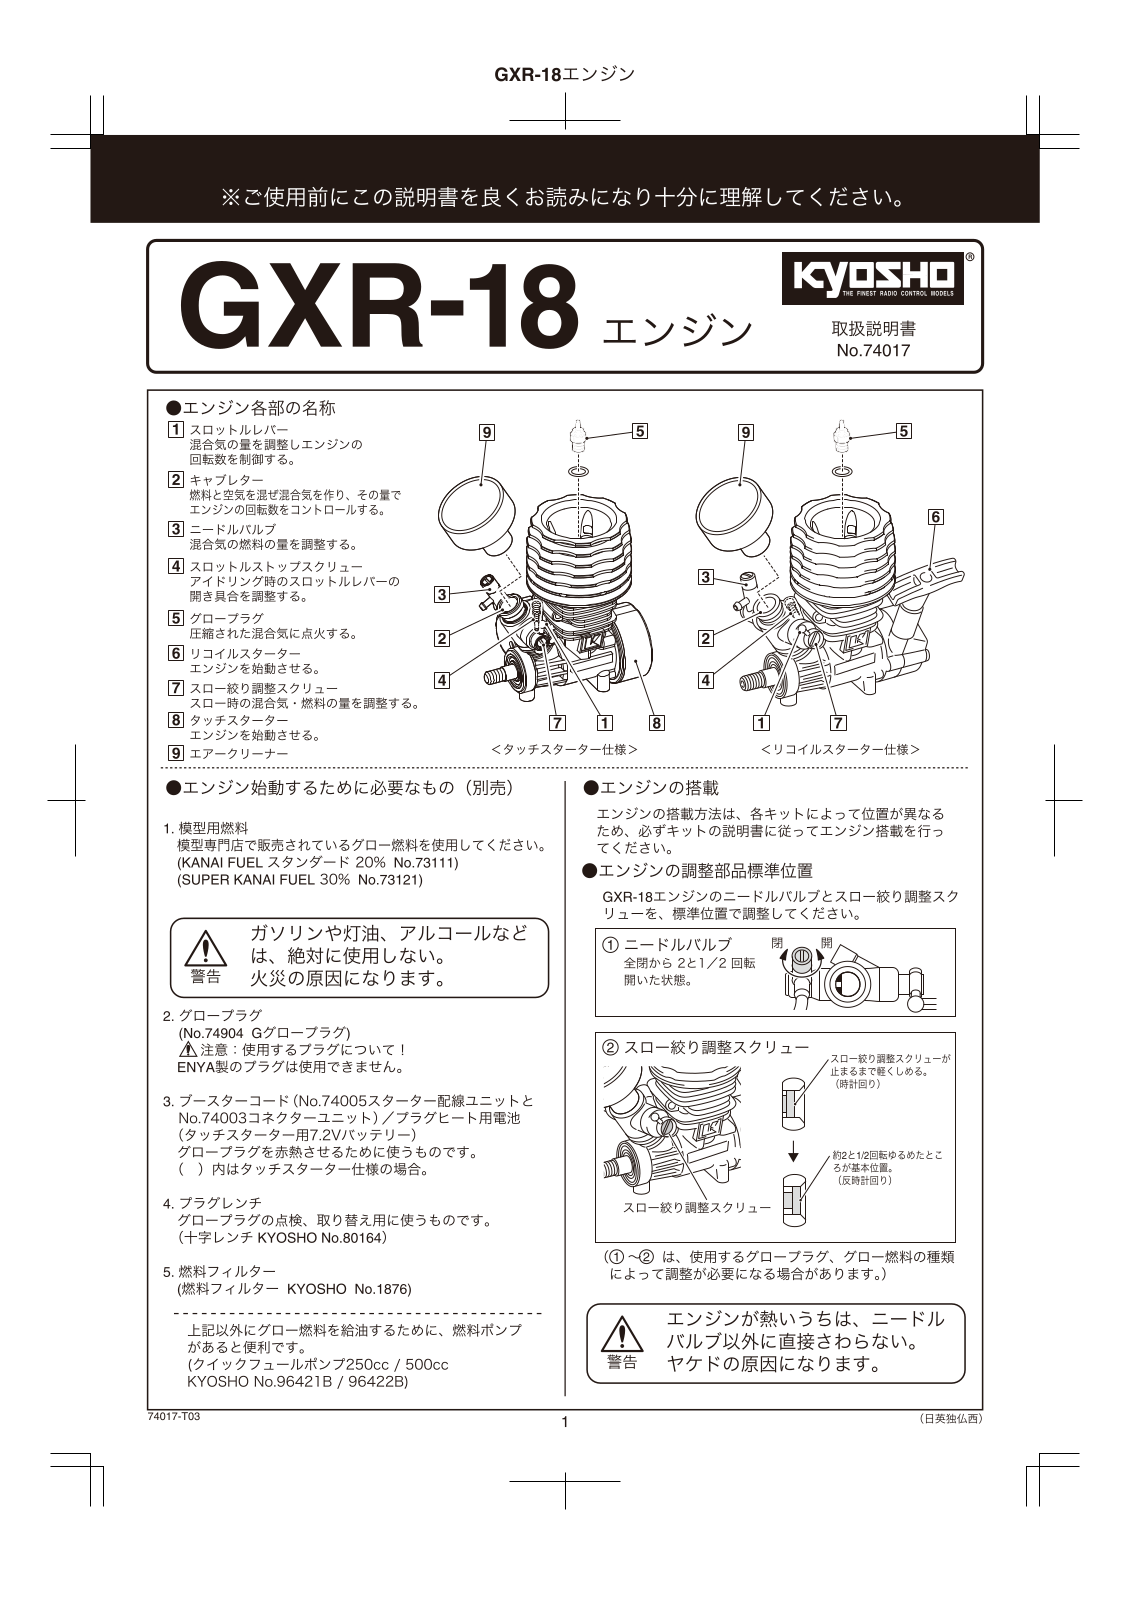 Kyosho GXR-18 Manual